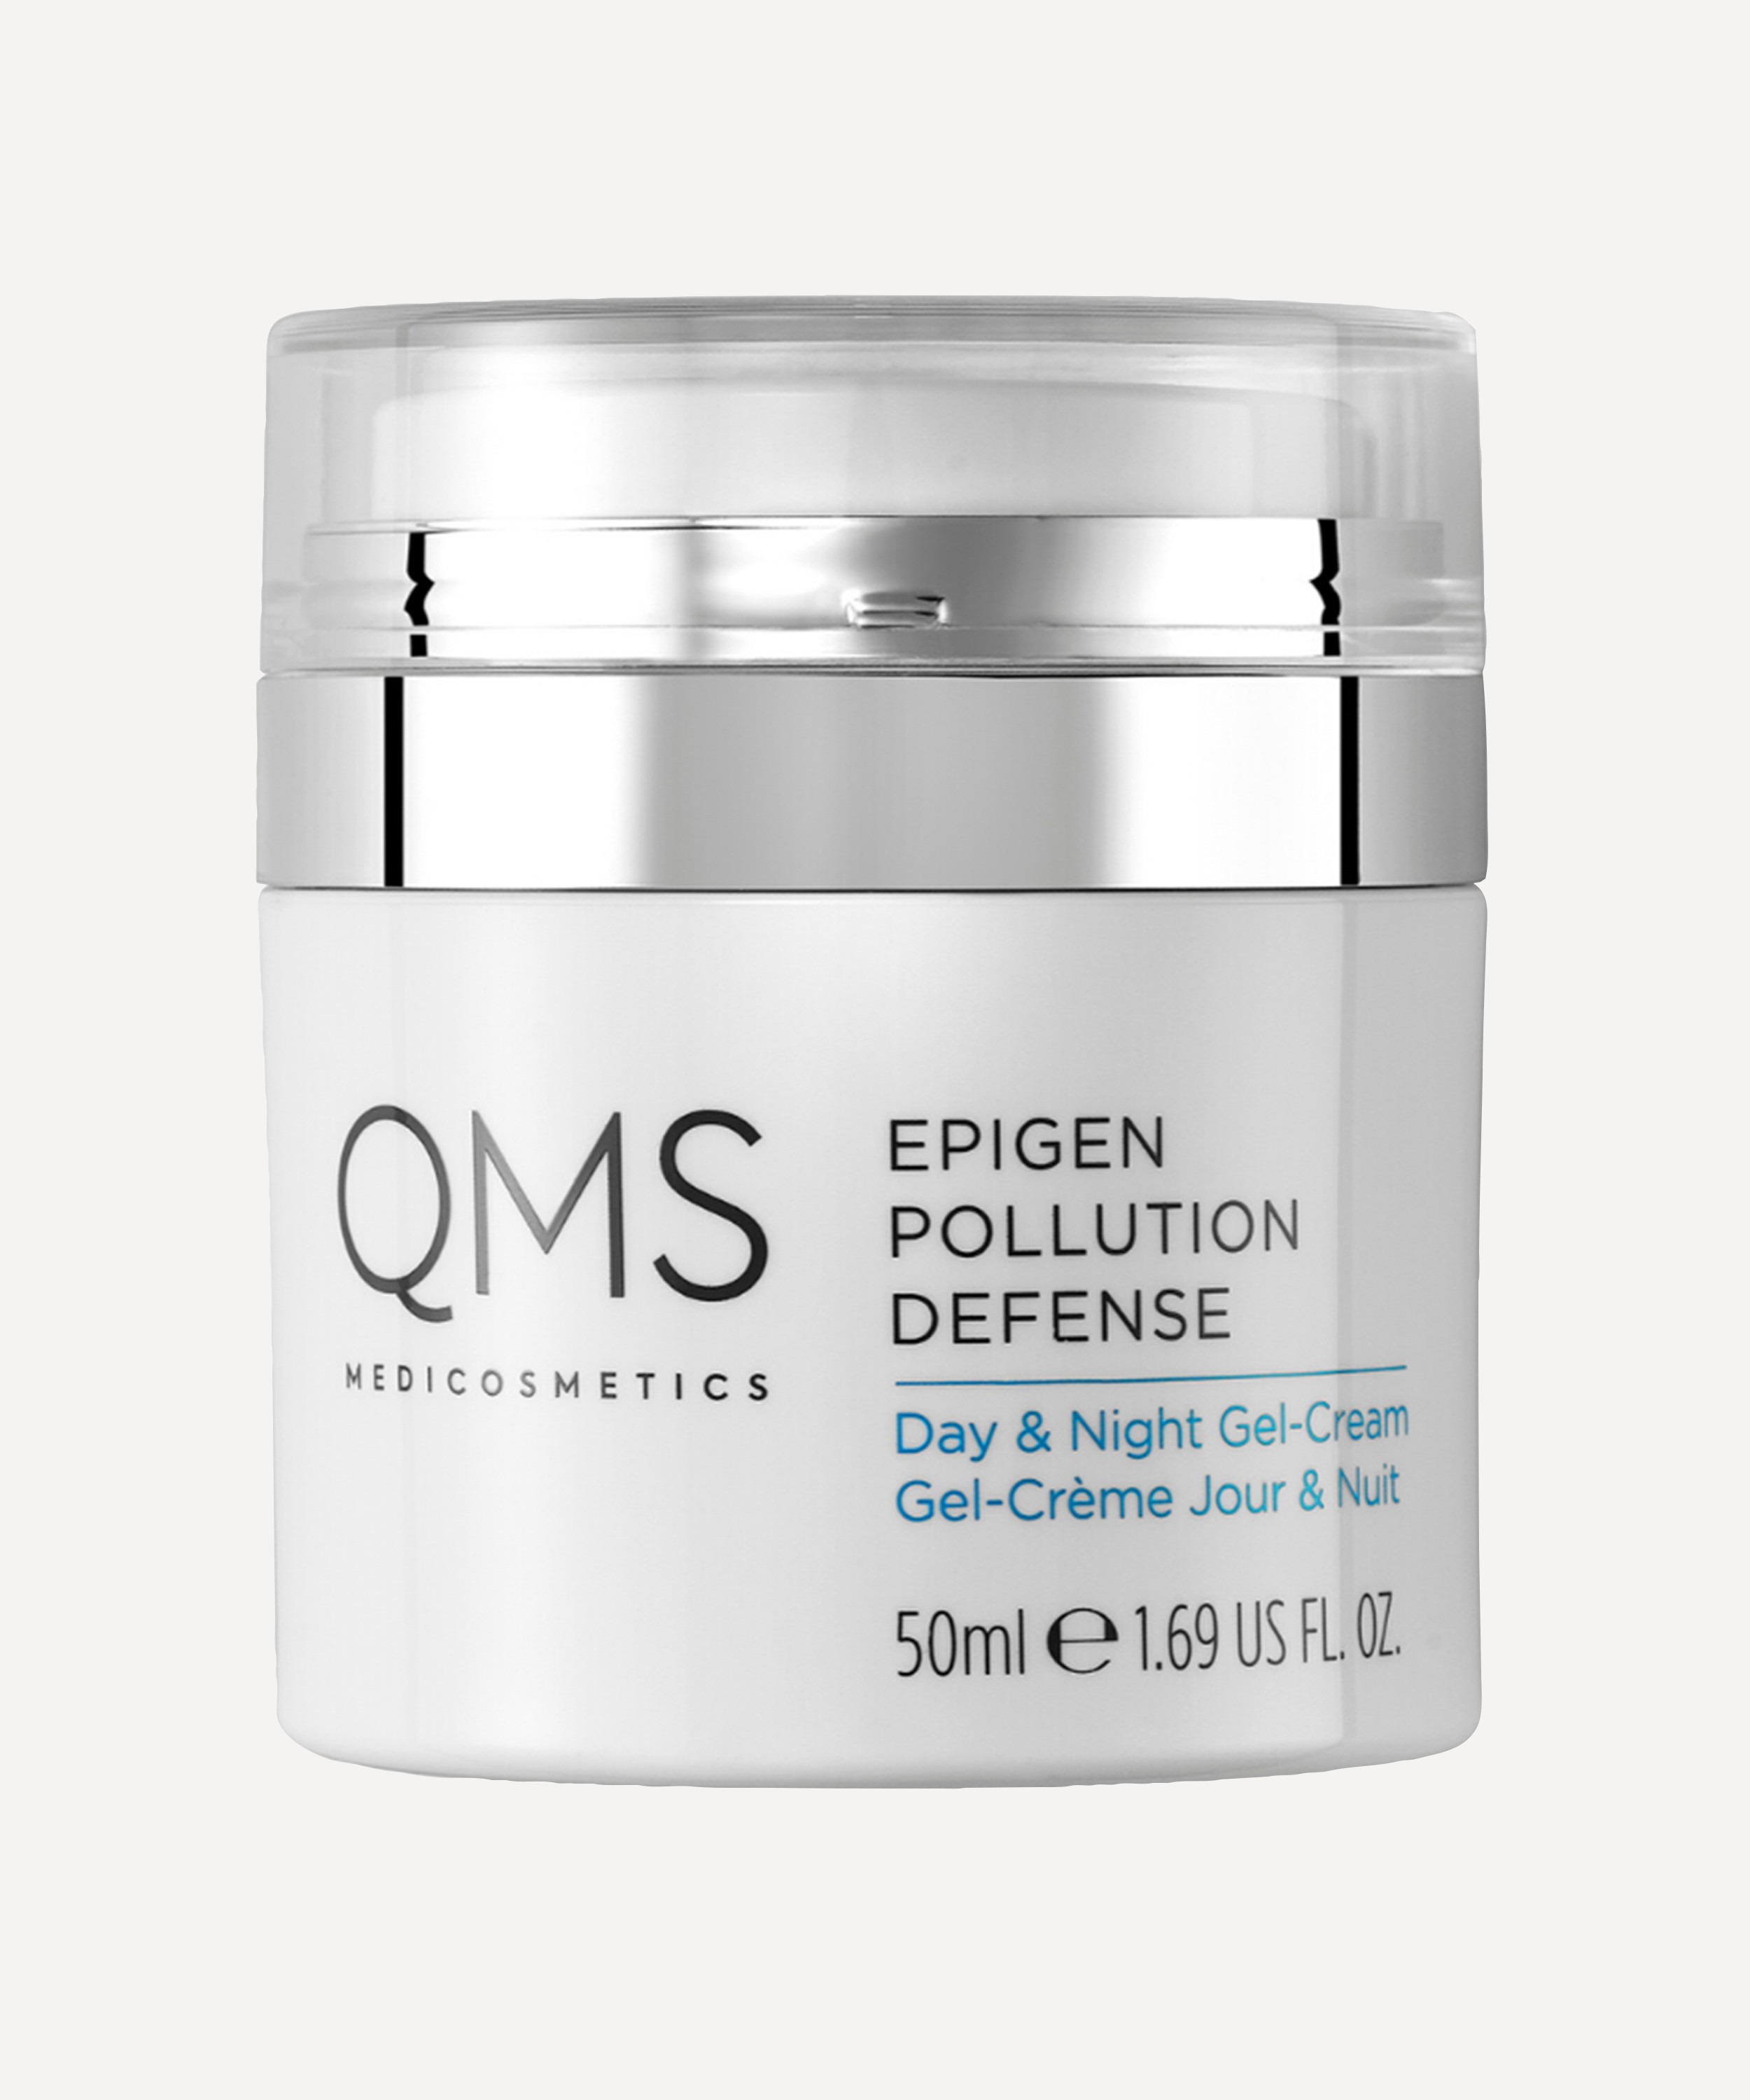 QMS Medicosmetics - Epigen Pollution Defence Day & Night Gel-Cream 50ml